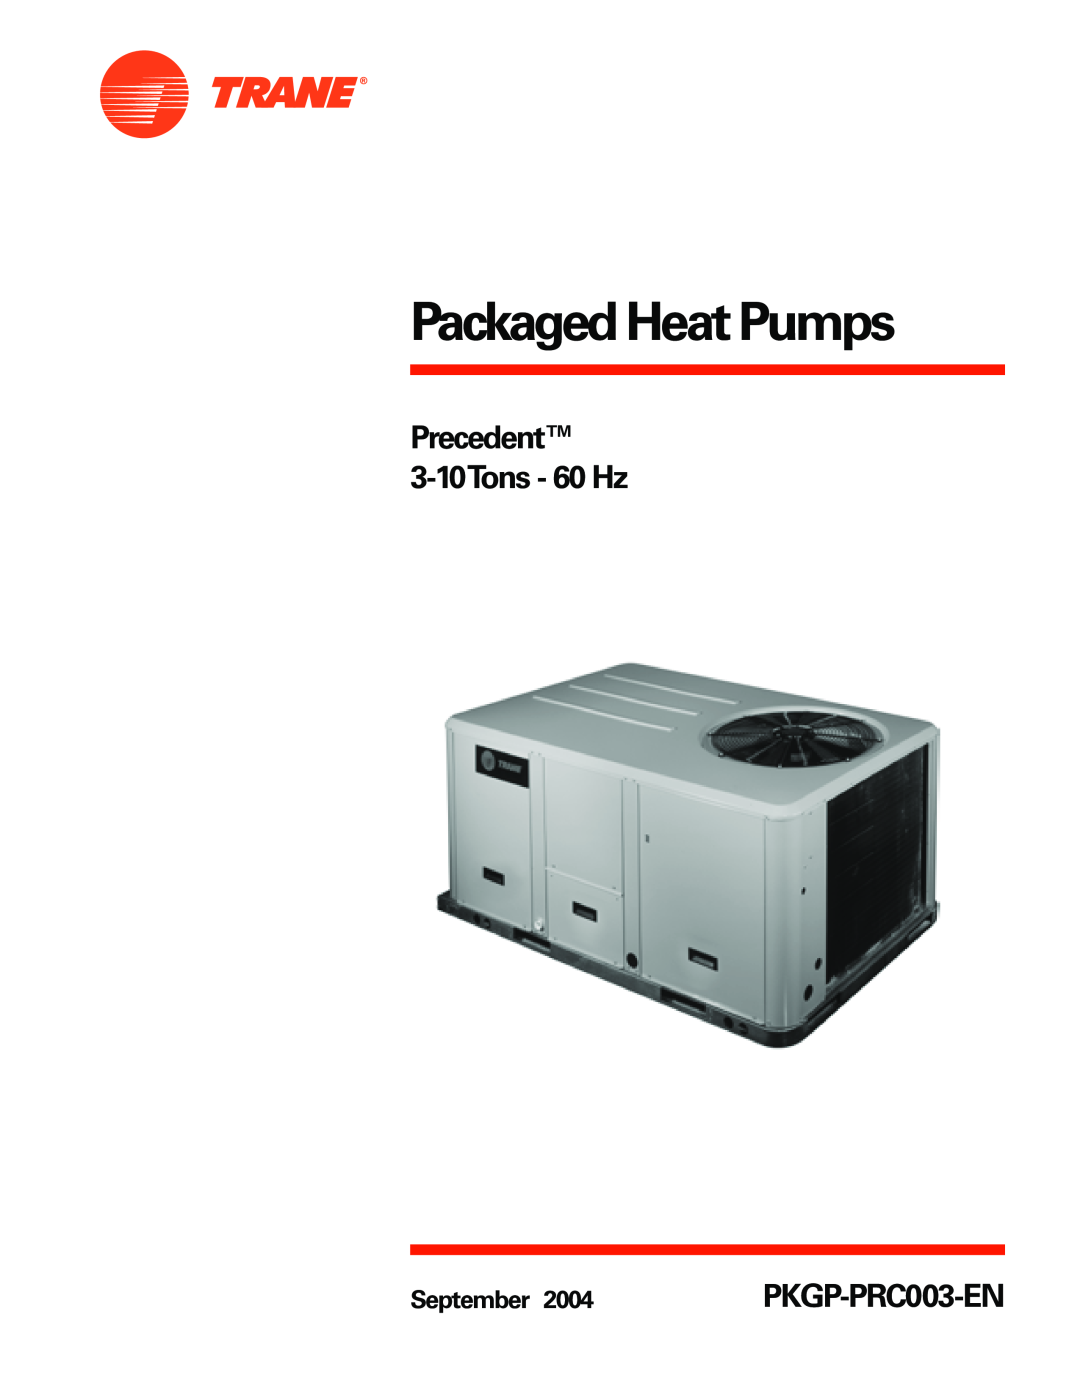 Trane PKGP-PRC003-EN manual Packaged Heat Pumps, Precedent 3-10Tons- 60 Hz, September 